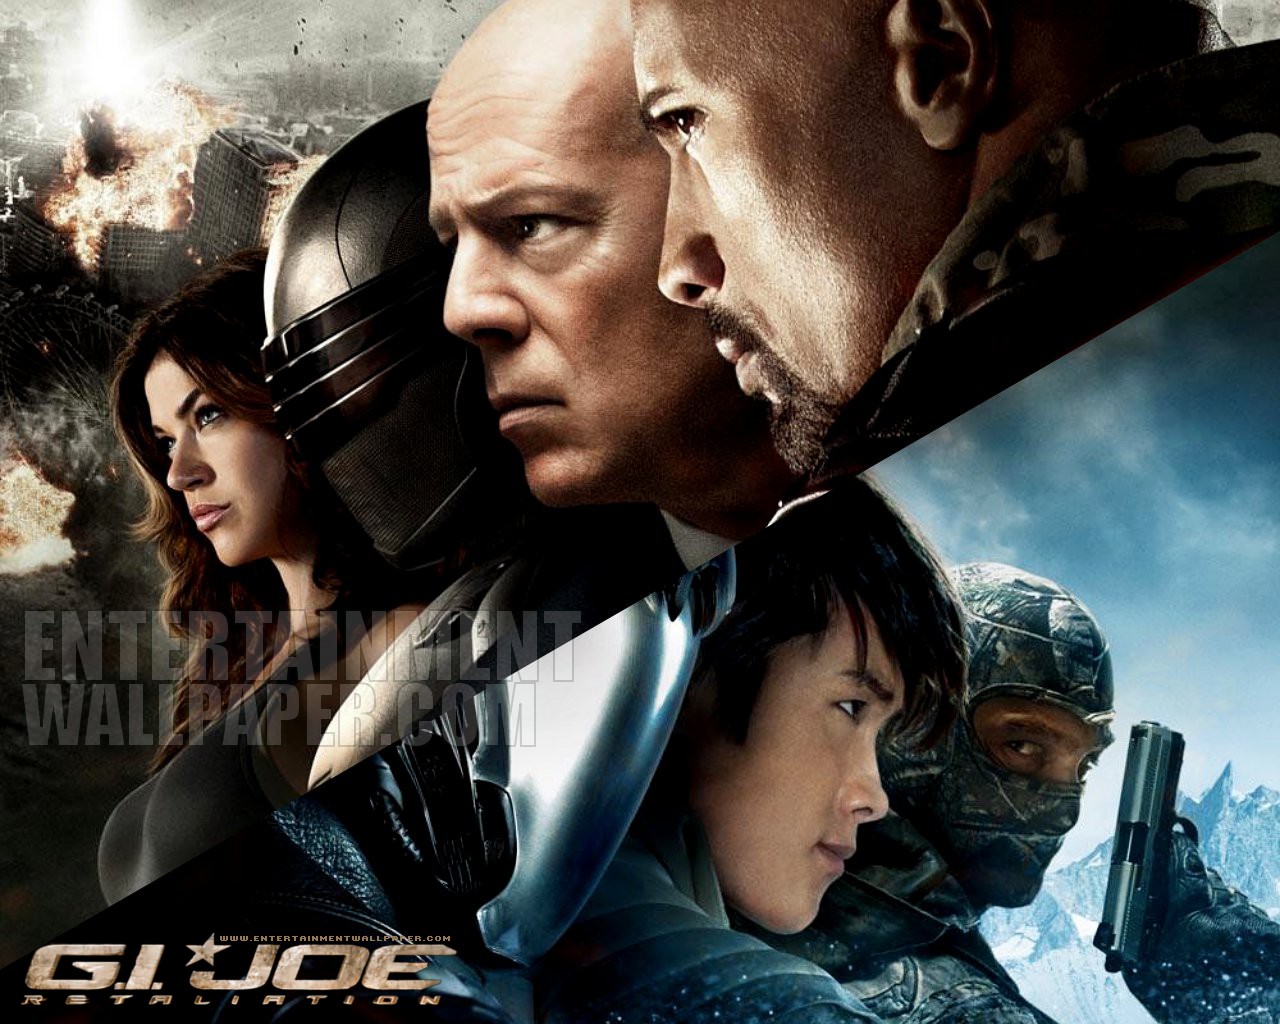 G.I Joe : Retaliation [2013] - Upcoming Movies Wallpaper (33873940) - Fanpop